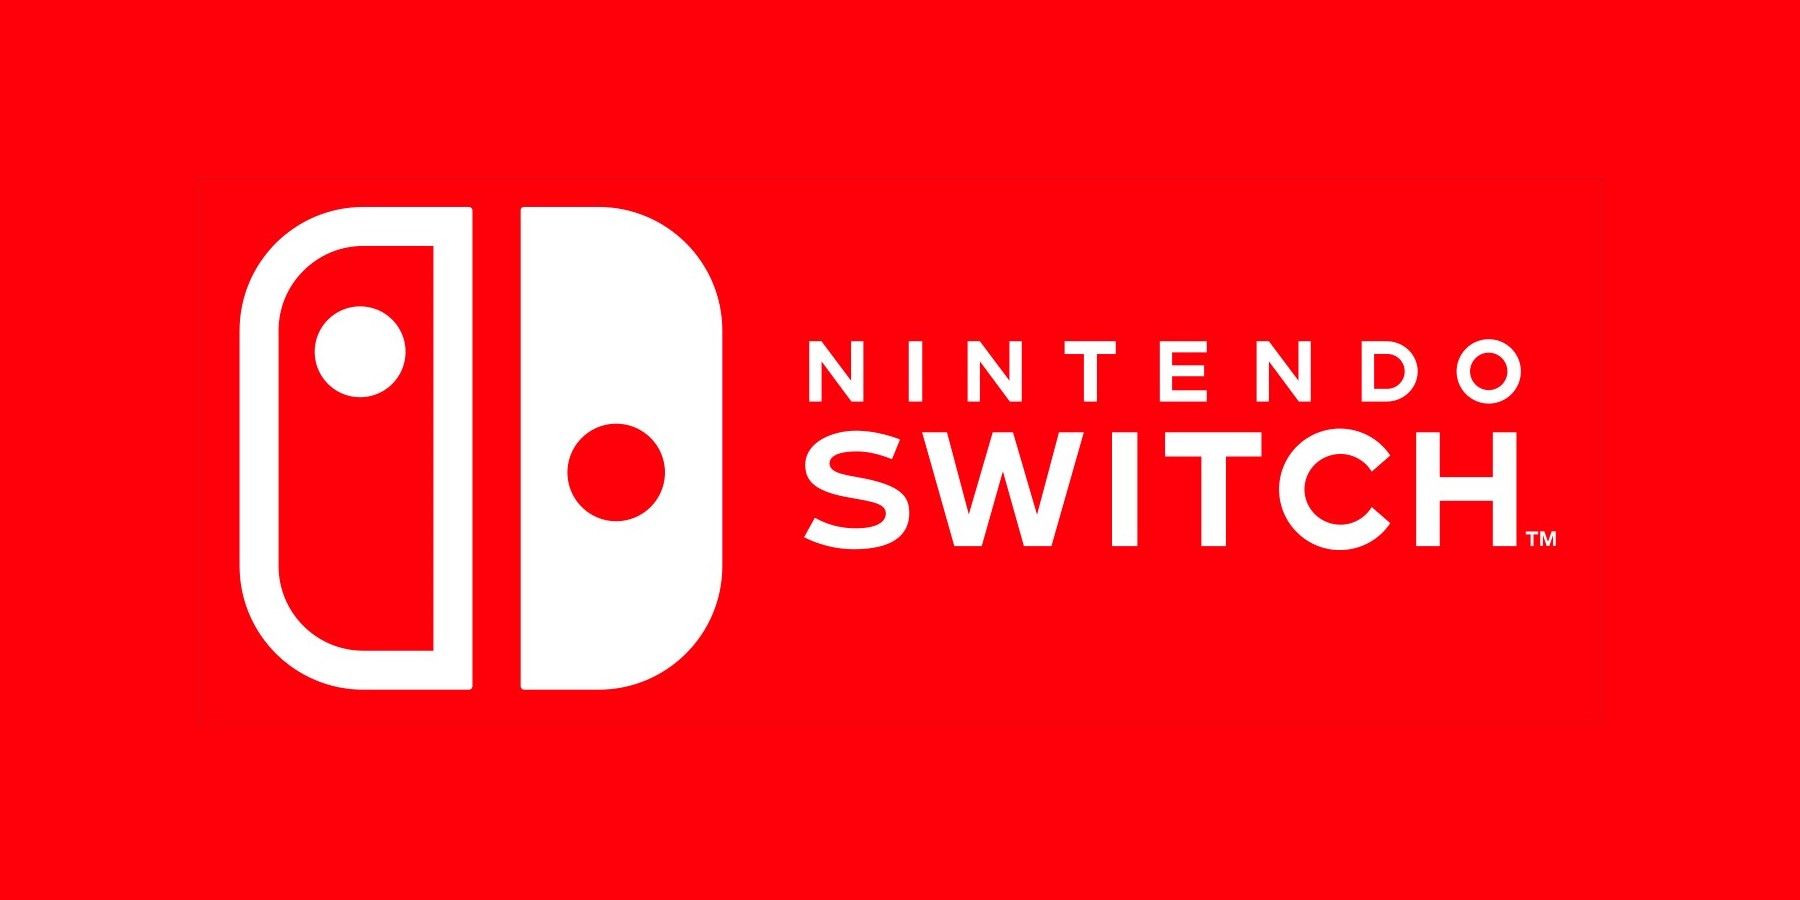 Nintendo Switch Looks Surprisingly Good on Old CRT TV